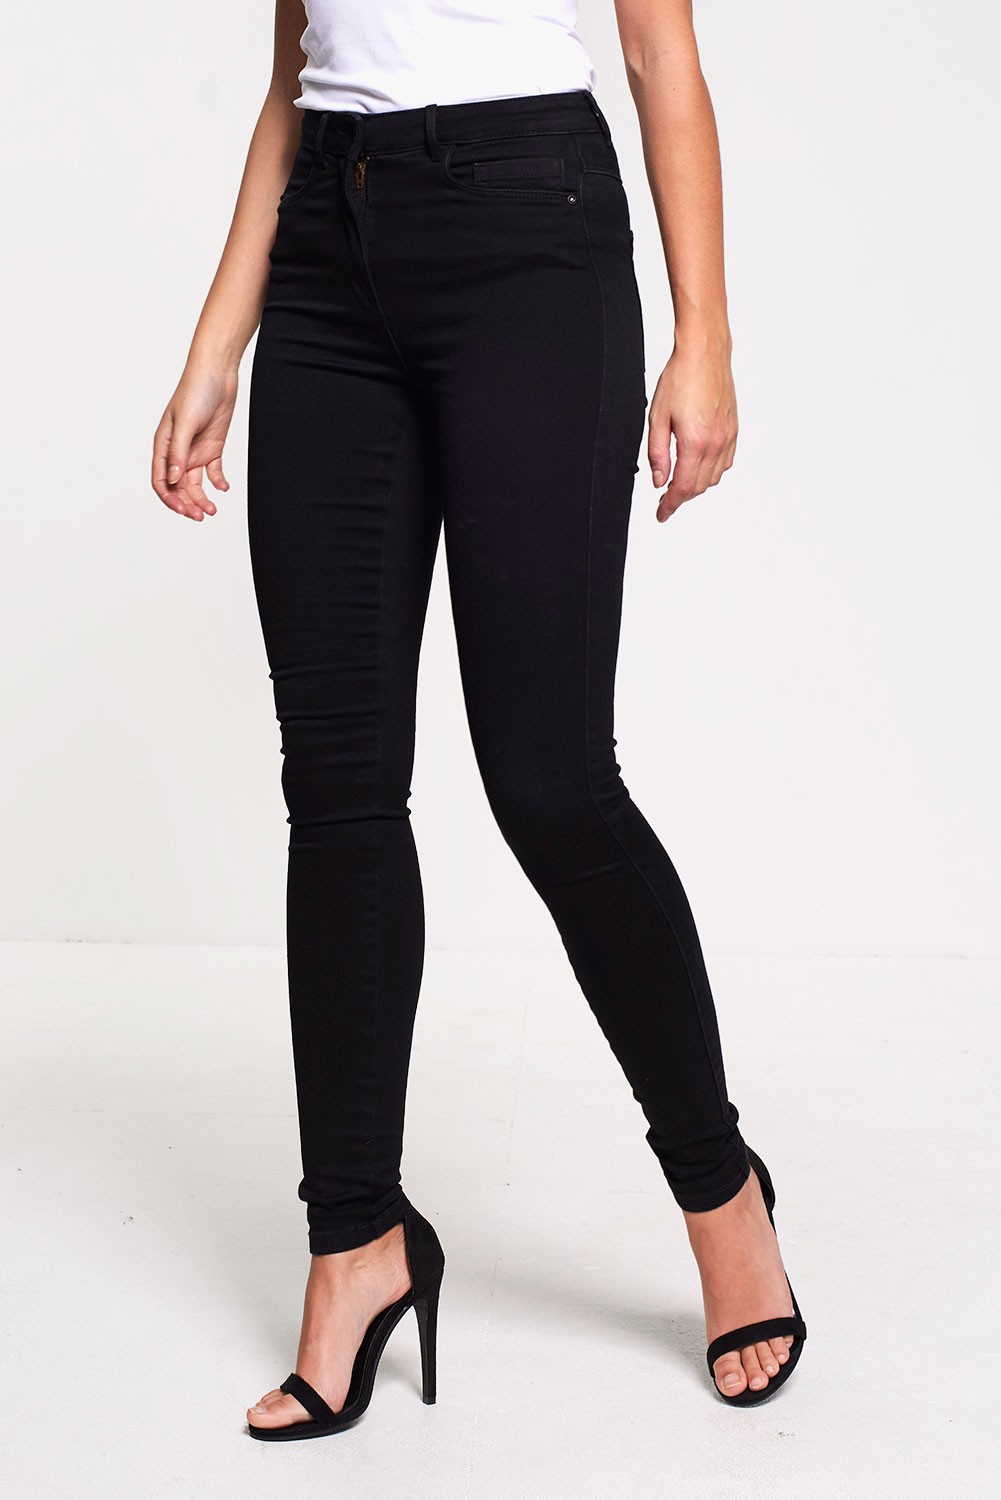 Vero Moda Sophia Regular High Waist Skinny Jeans in Black | iCLOTHING